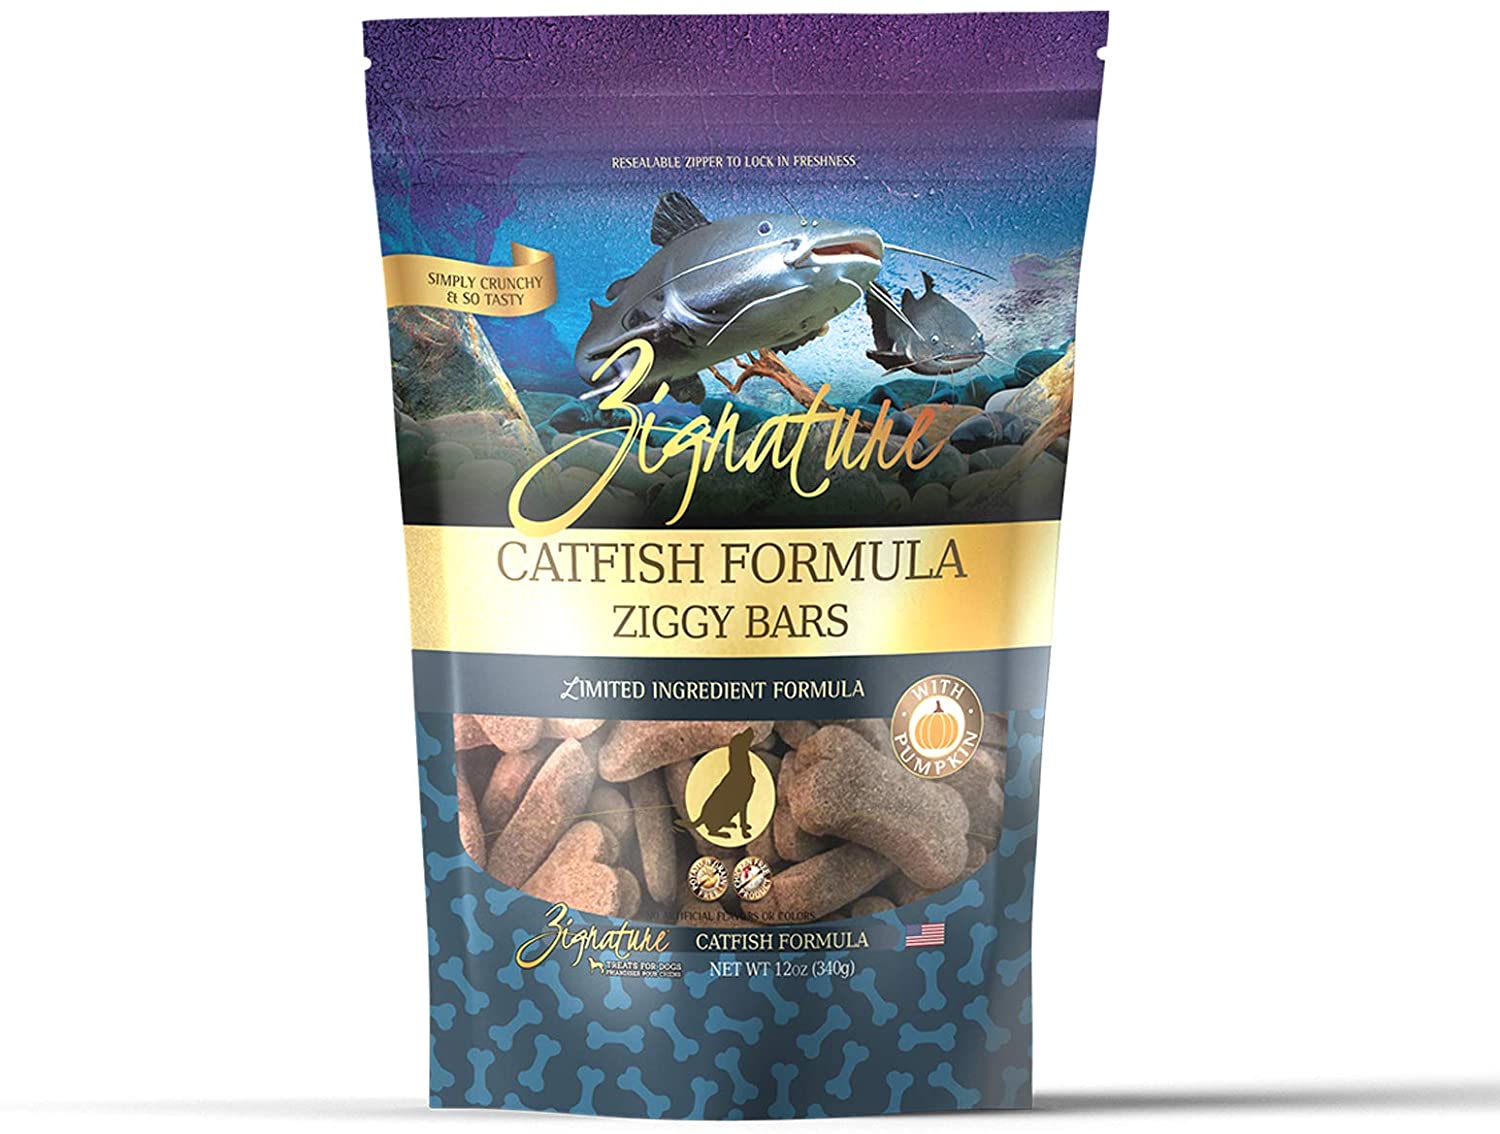 12-Oz Zignature Limited Ingredient Formula Ziggy Bars Biscuit Dog Treats (Catfish) $4.10 + Free Shipping w/ Amazon Prime or Orders $25+